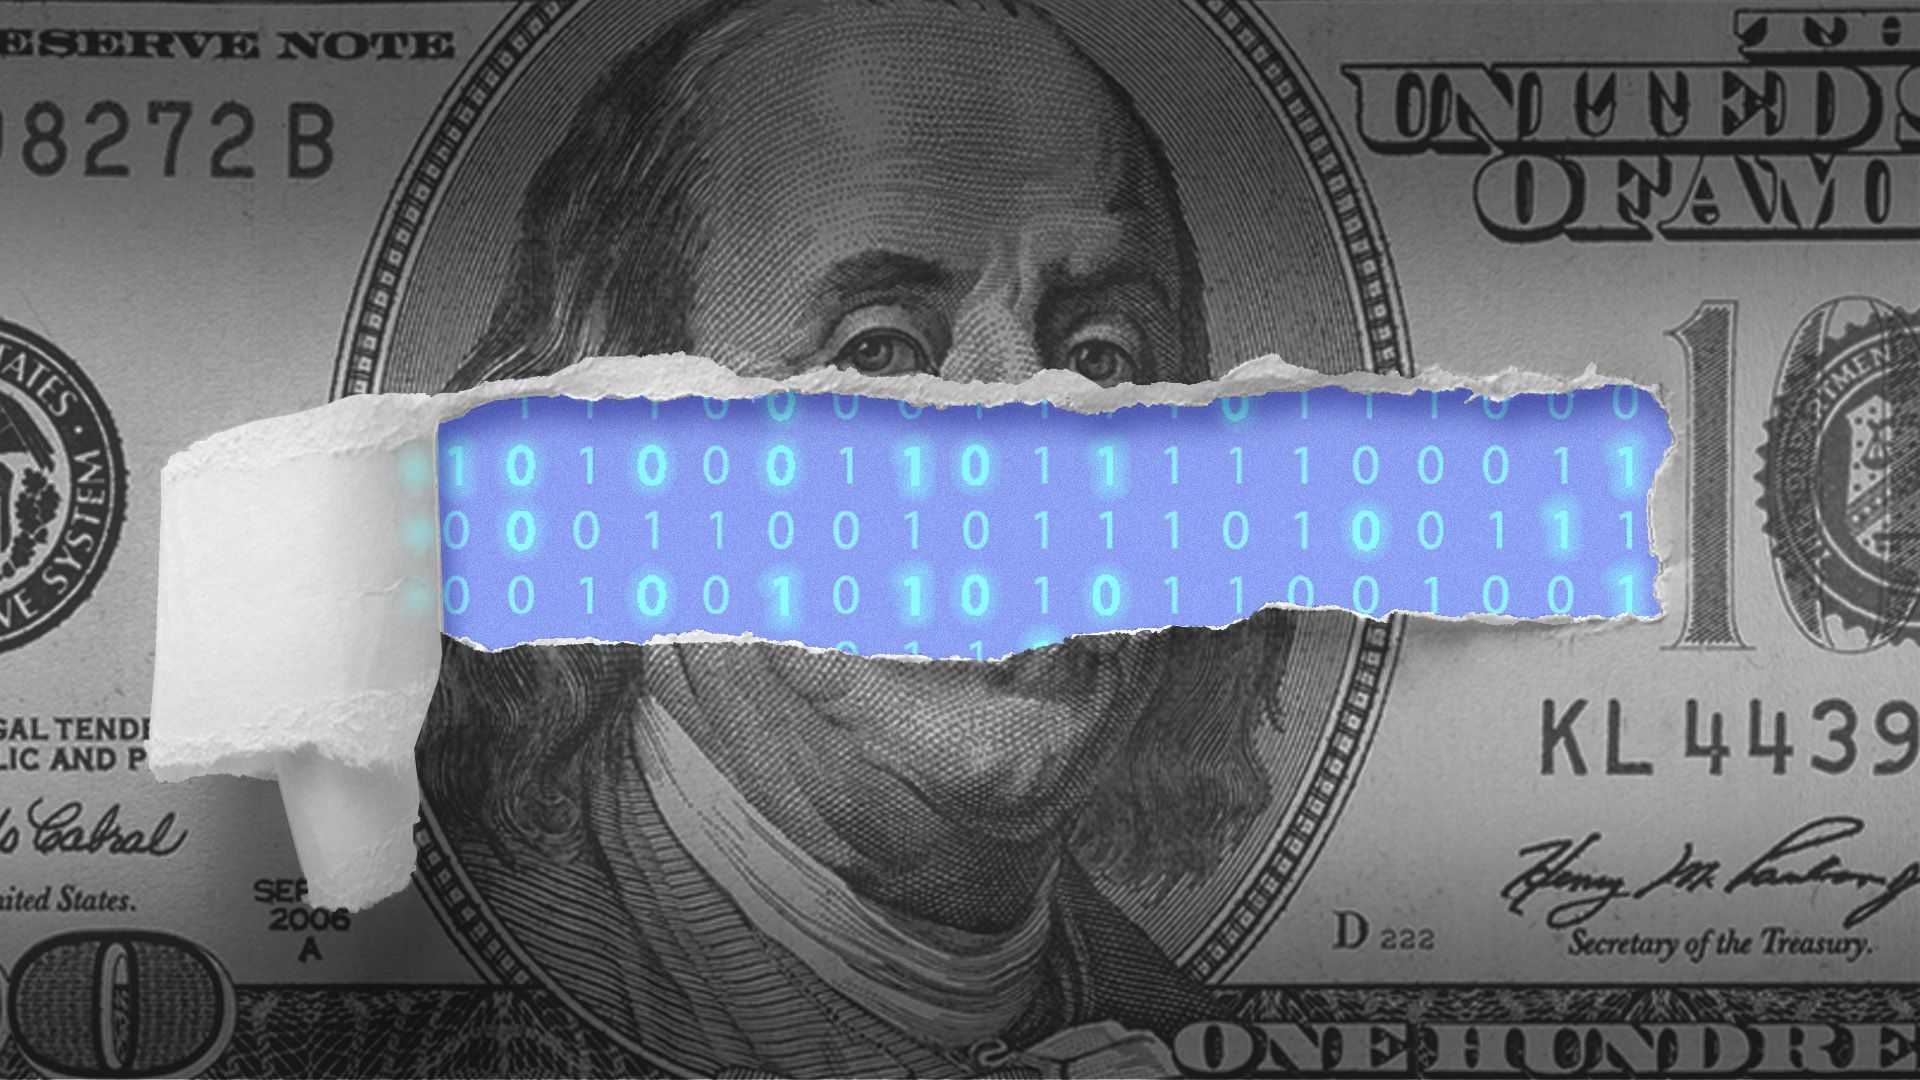 Illustration of a torn hundred dollar bill revealing binary code beneath